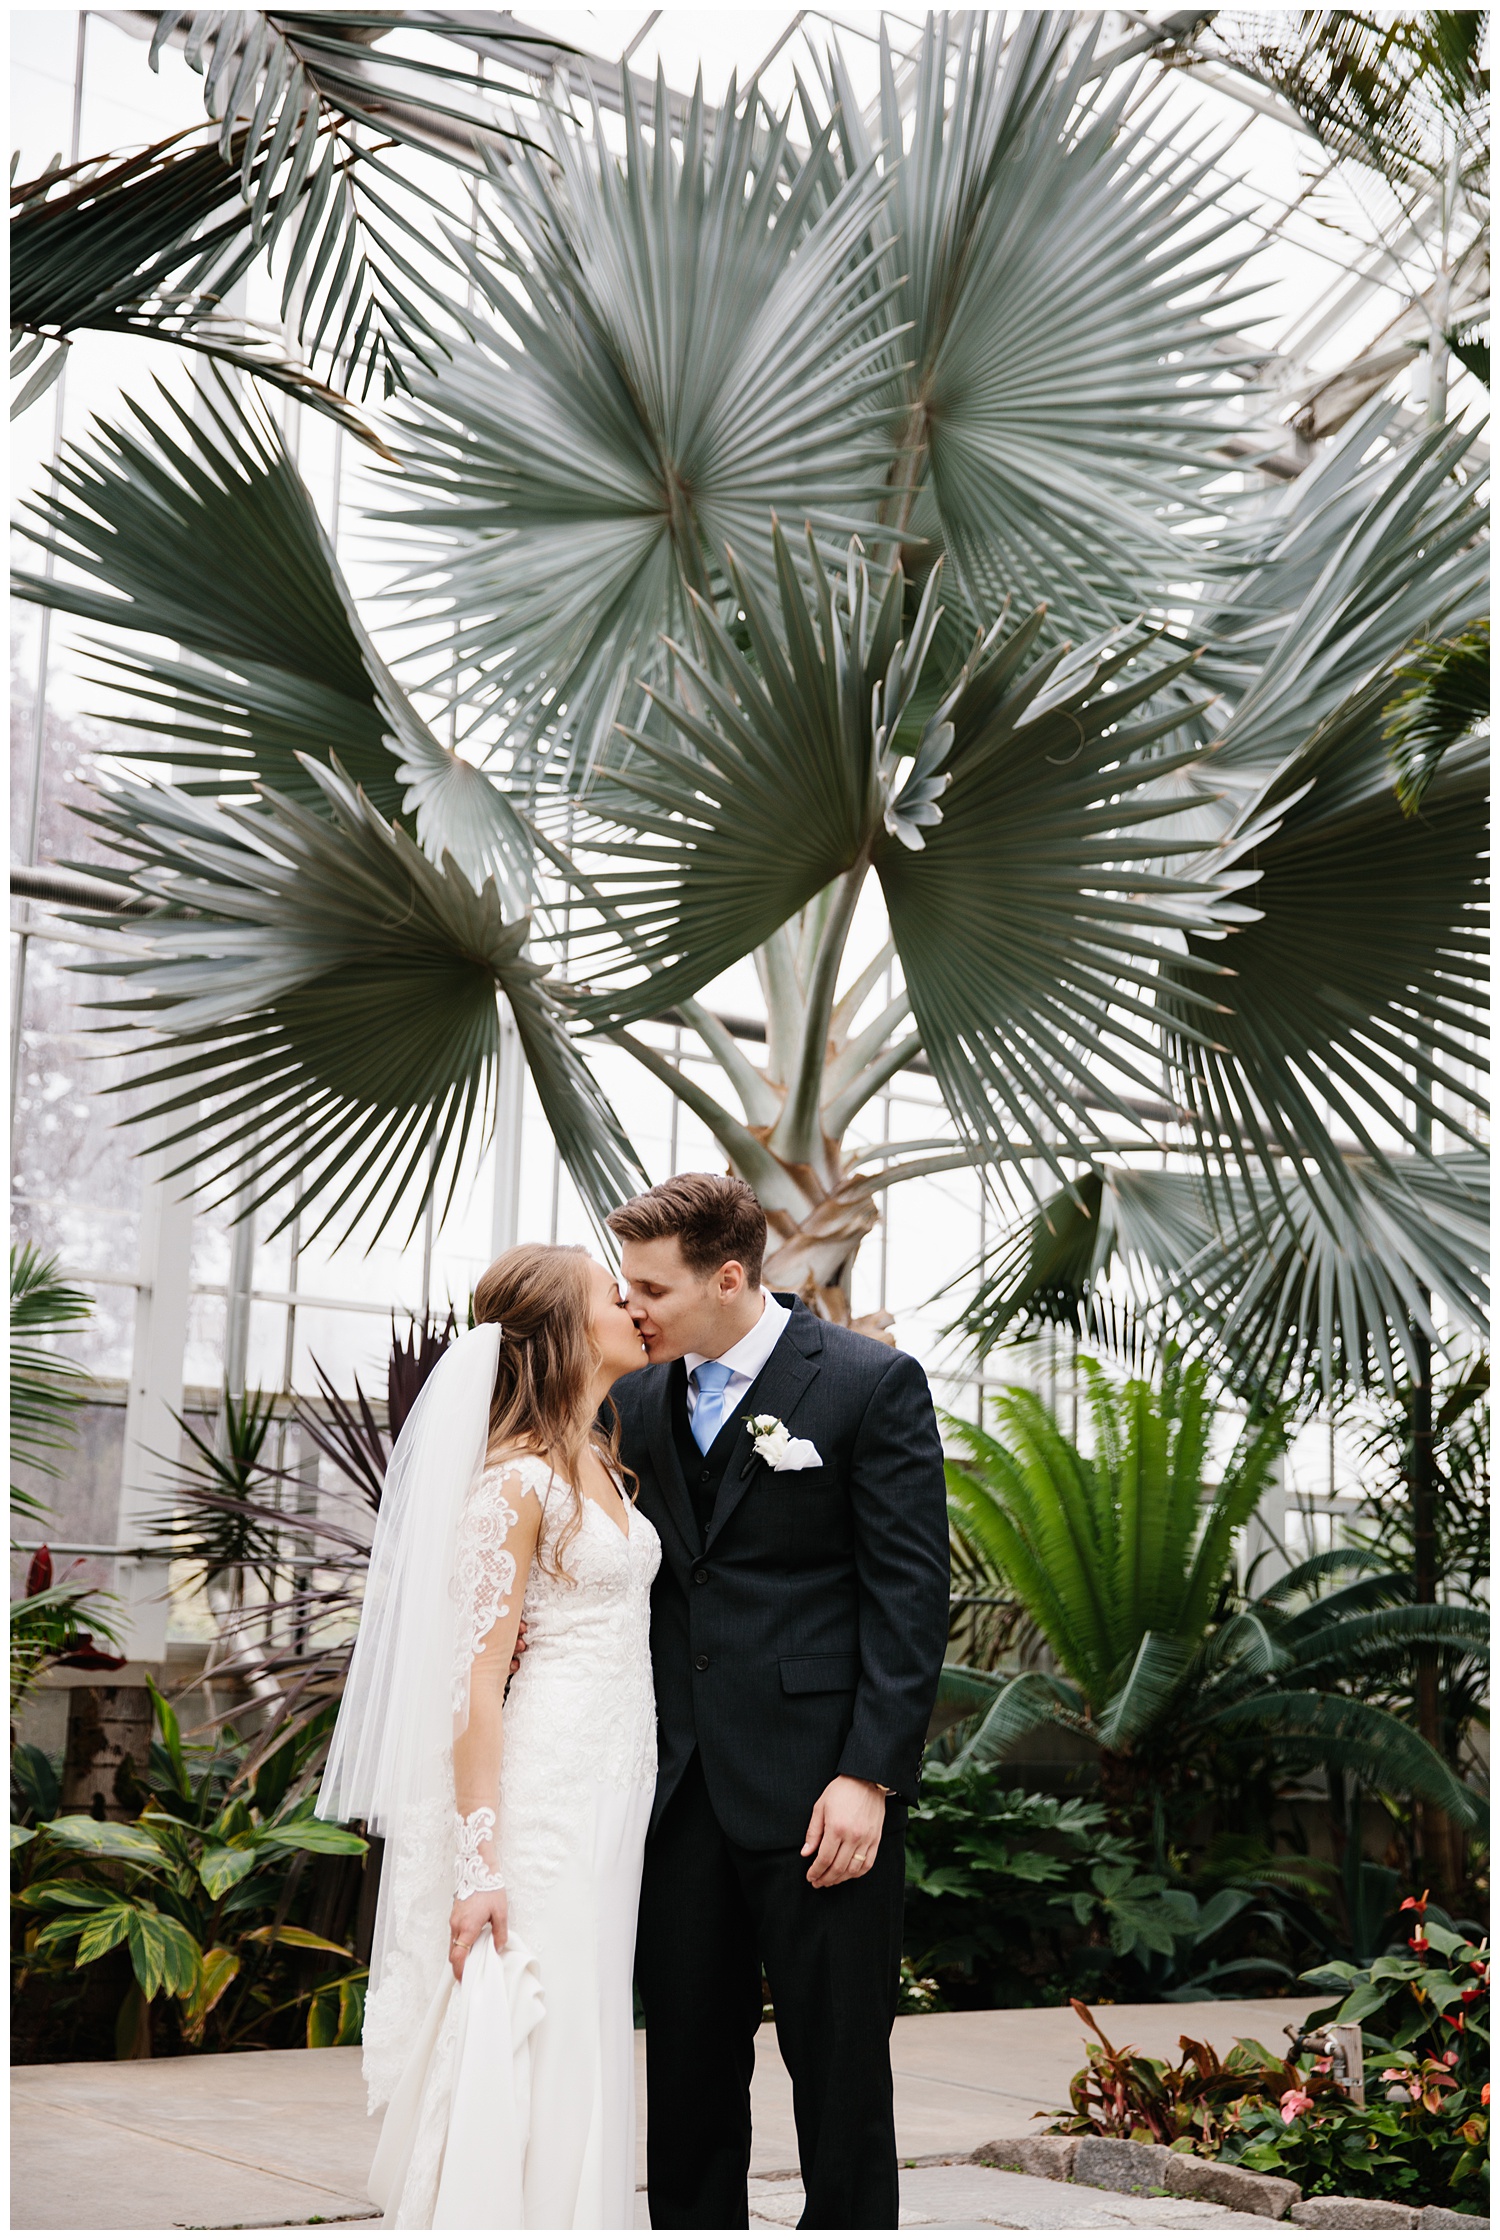 Tyler + Brynn + Botanical Gardens + Roger Williams + Rhode Island + Wedding_0090.jpg